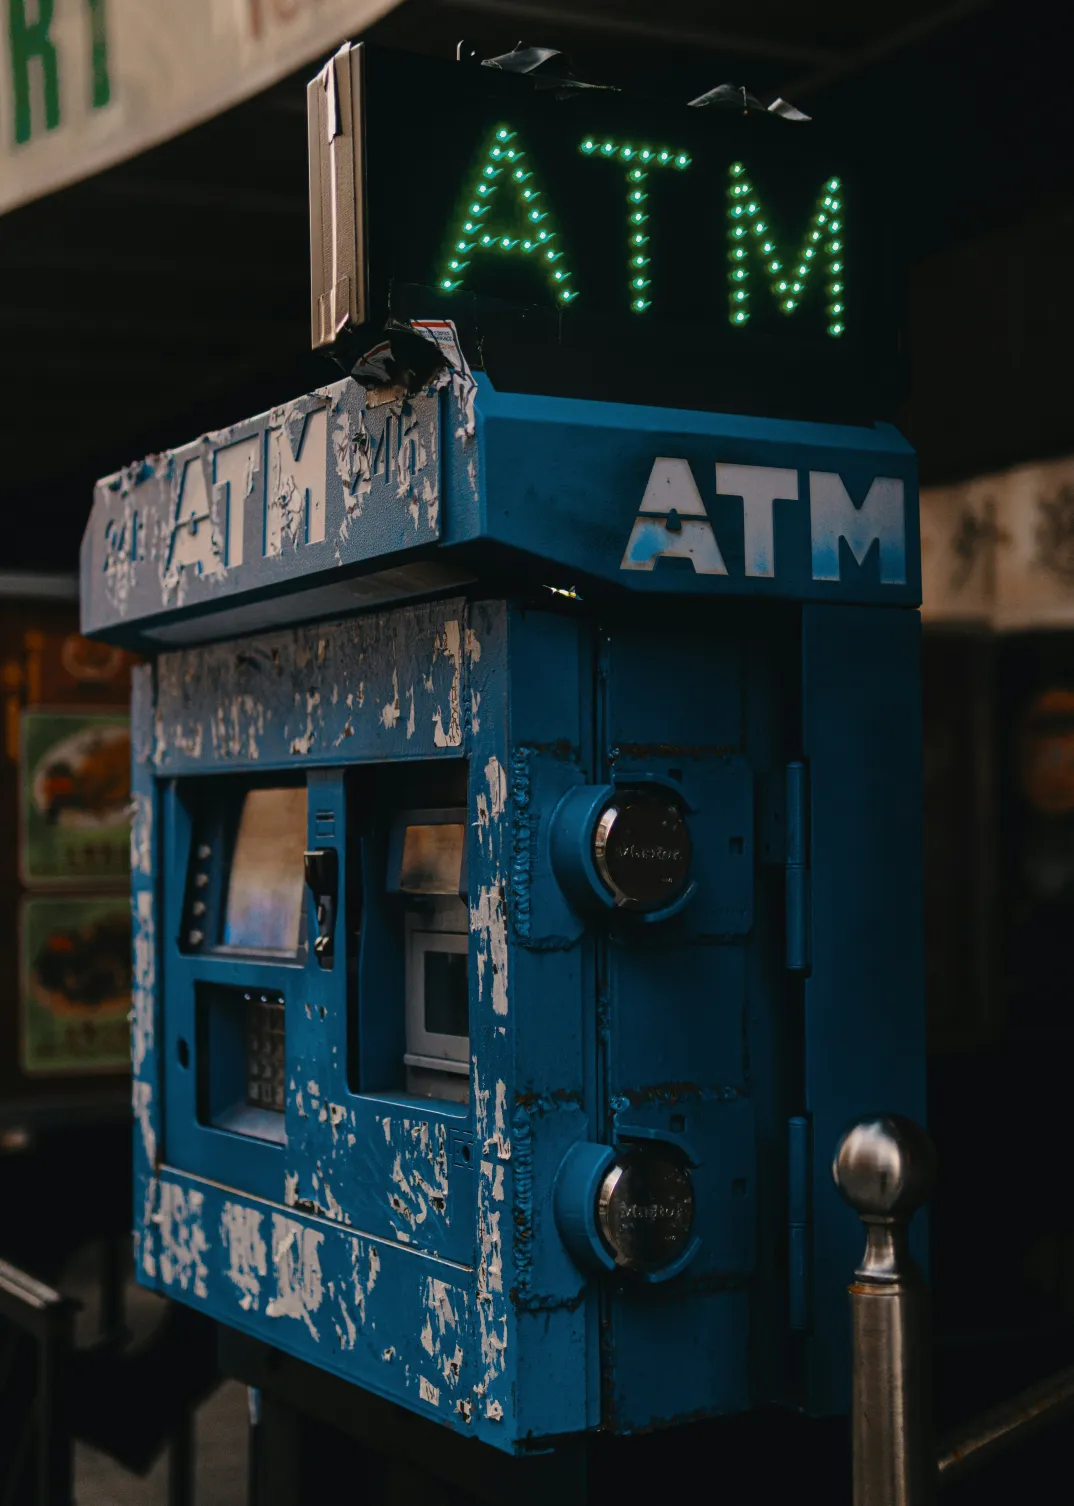 ATm ATM Machine, Cash Machine, thegrio.com, when not to use your debit card